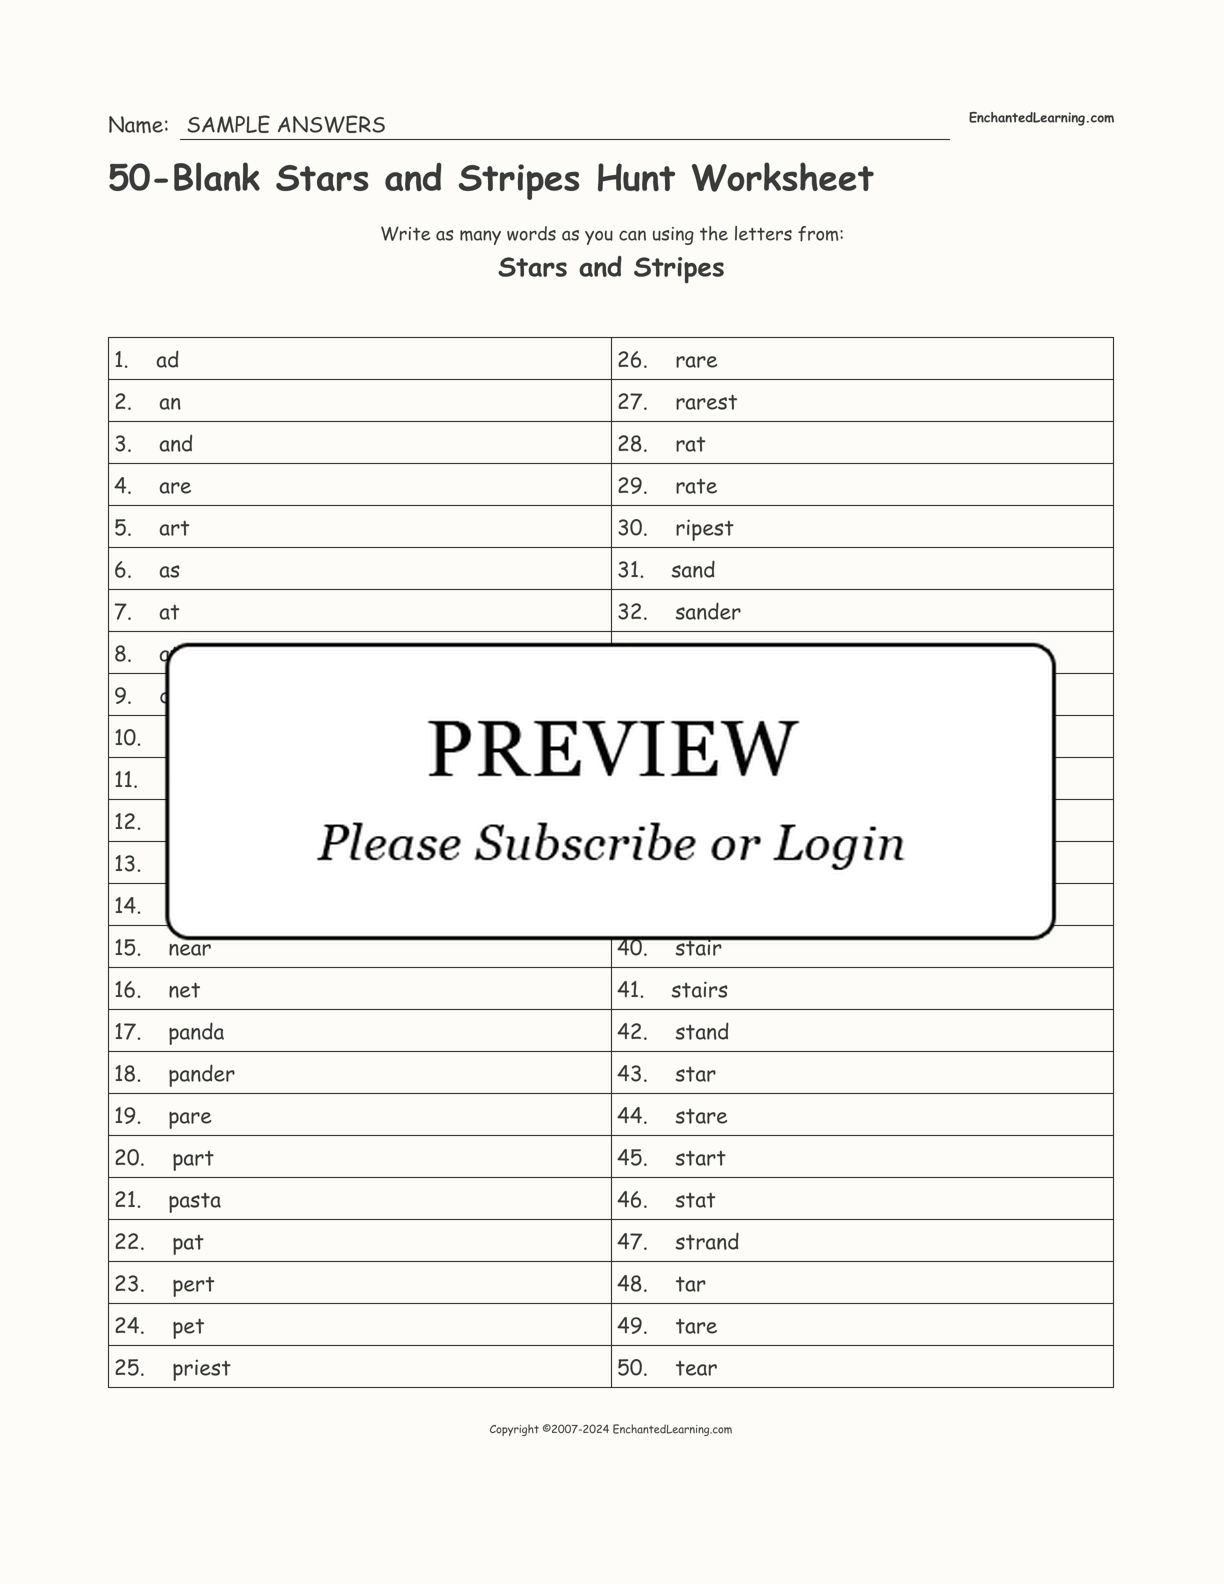 50-Blank Stars and Stripes Hunt Worksheet interactive worksheet page 2